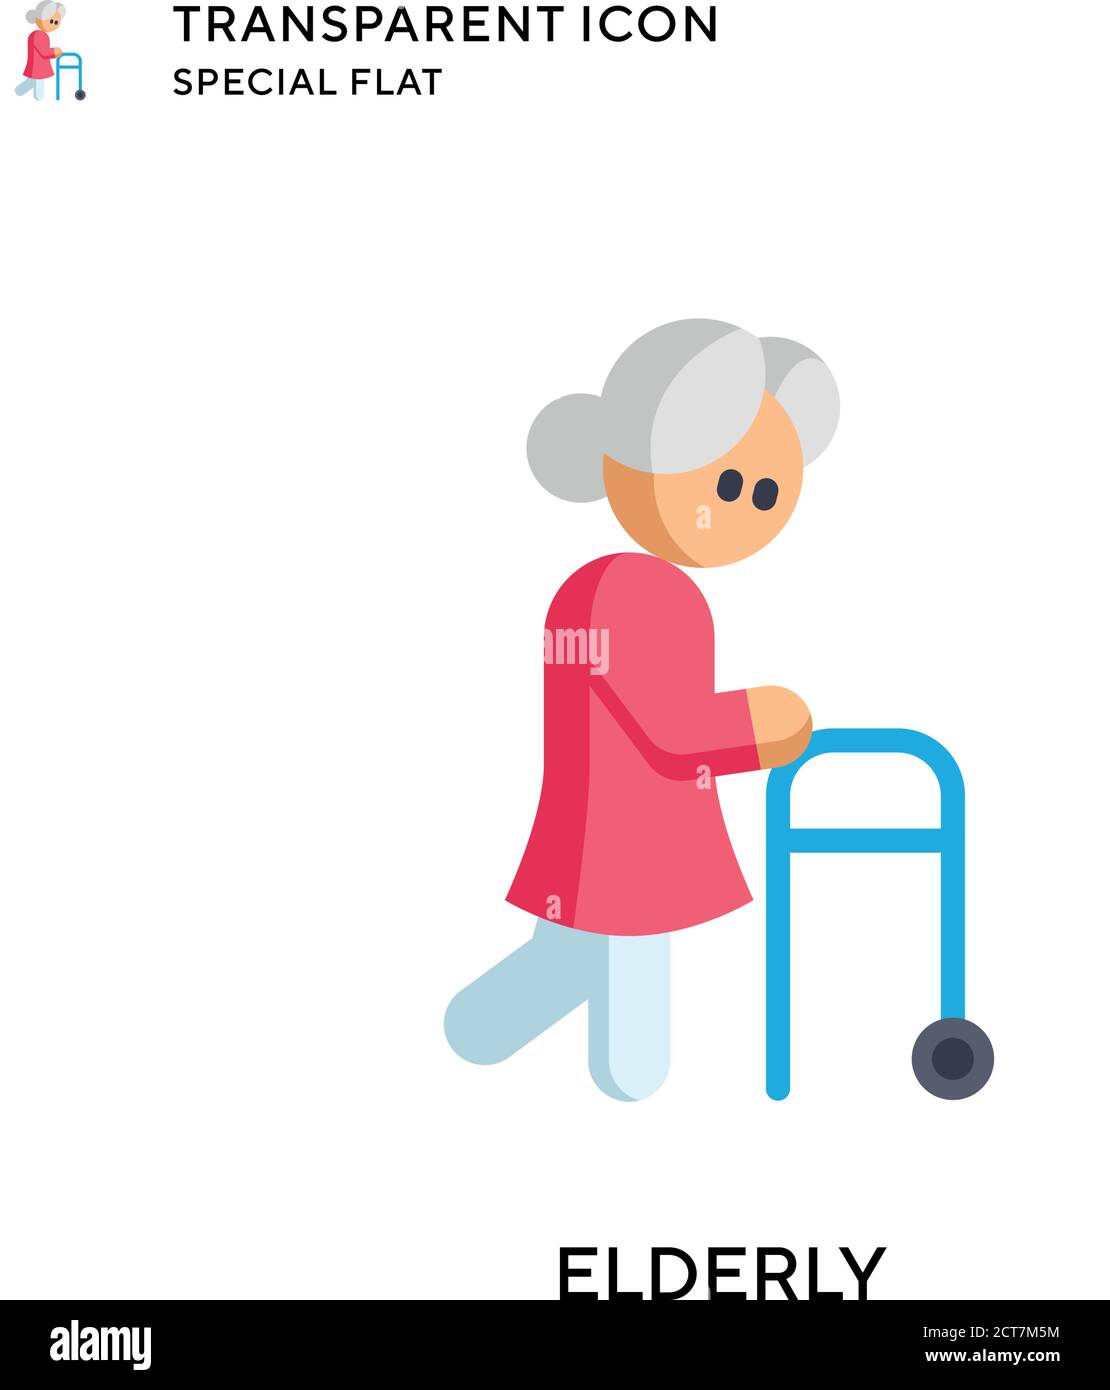 Elderly vector icon. Flat style illustration. EPS 10 vector. Stock Vector